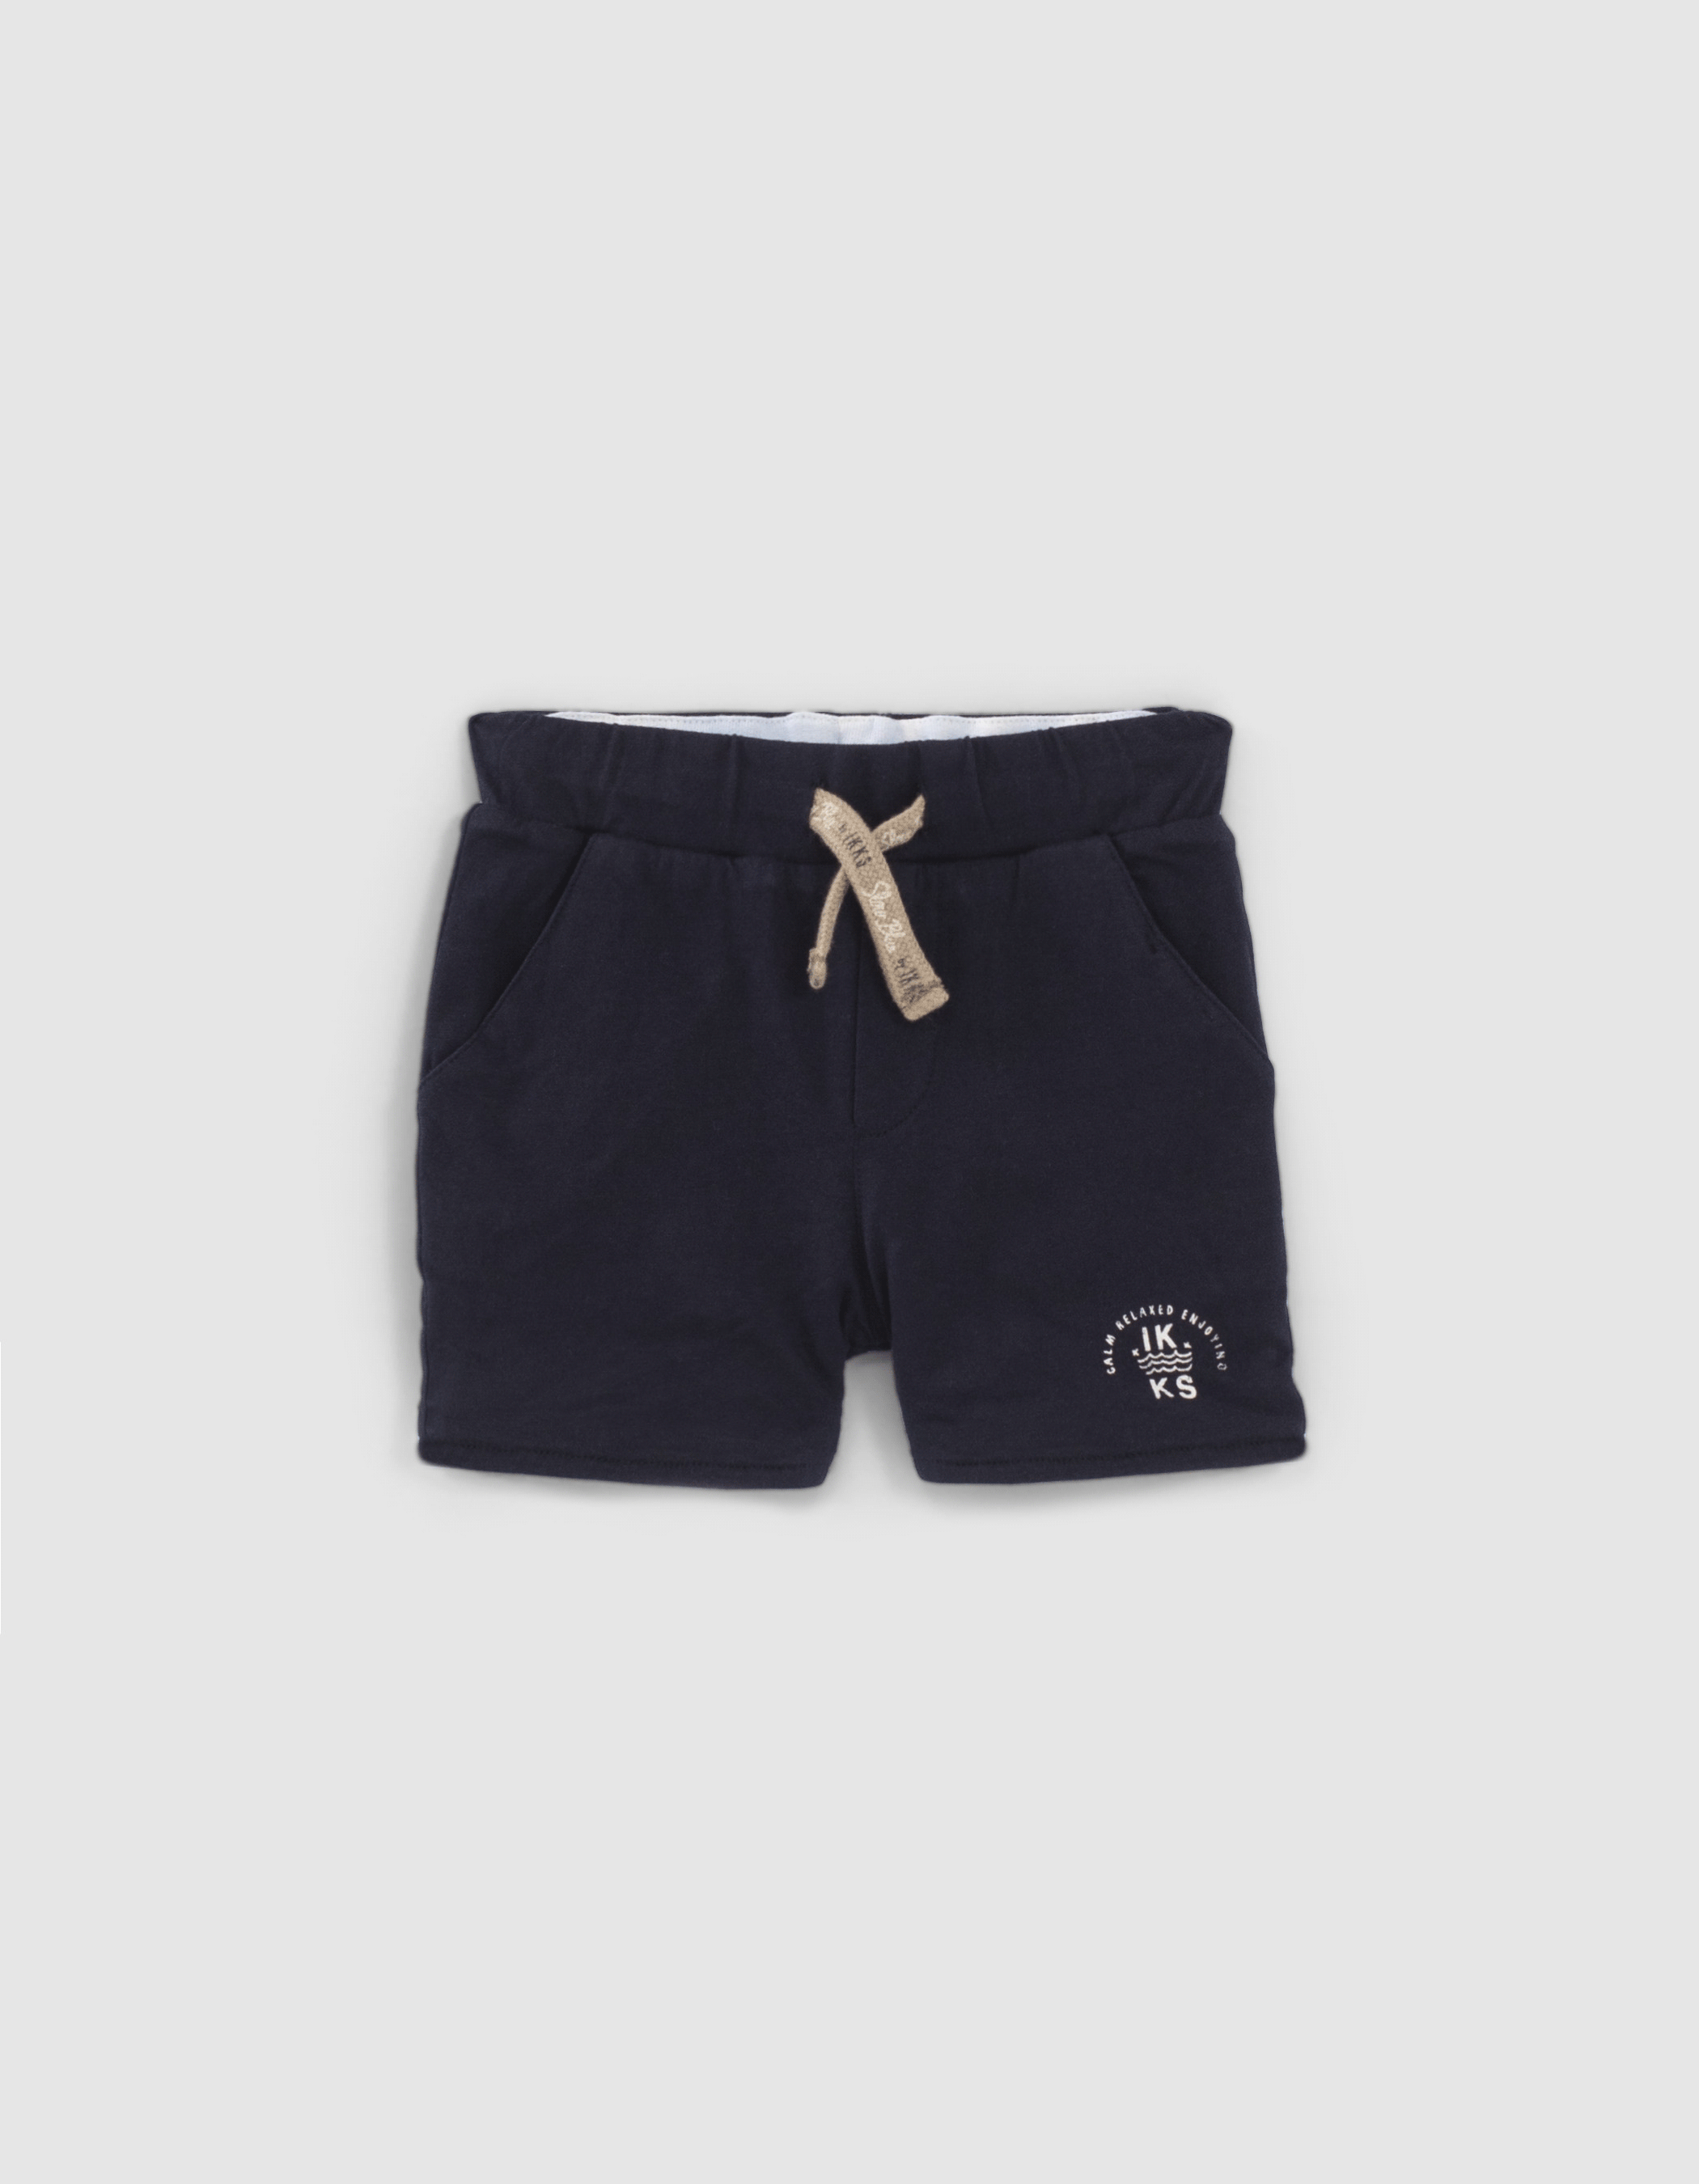 Baby boy’s navy and tie-dye reversible Bermuda shorts